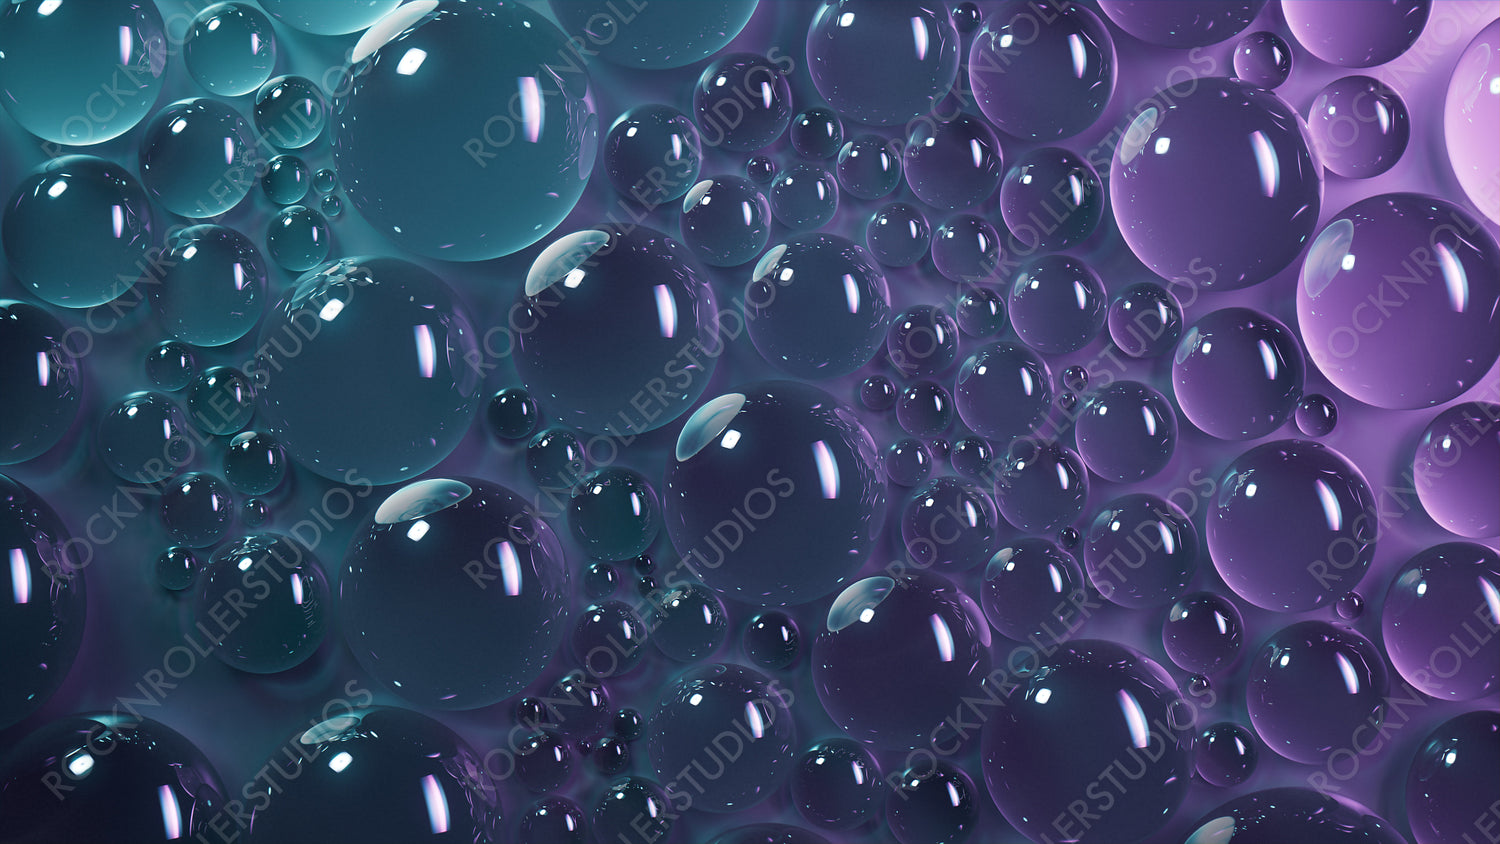 Teal and Violet Liquid Droplets Background.